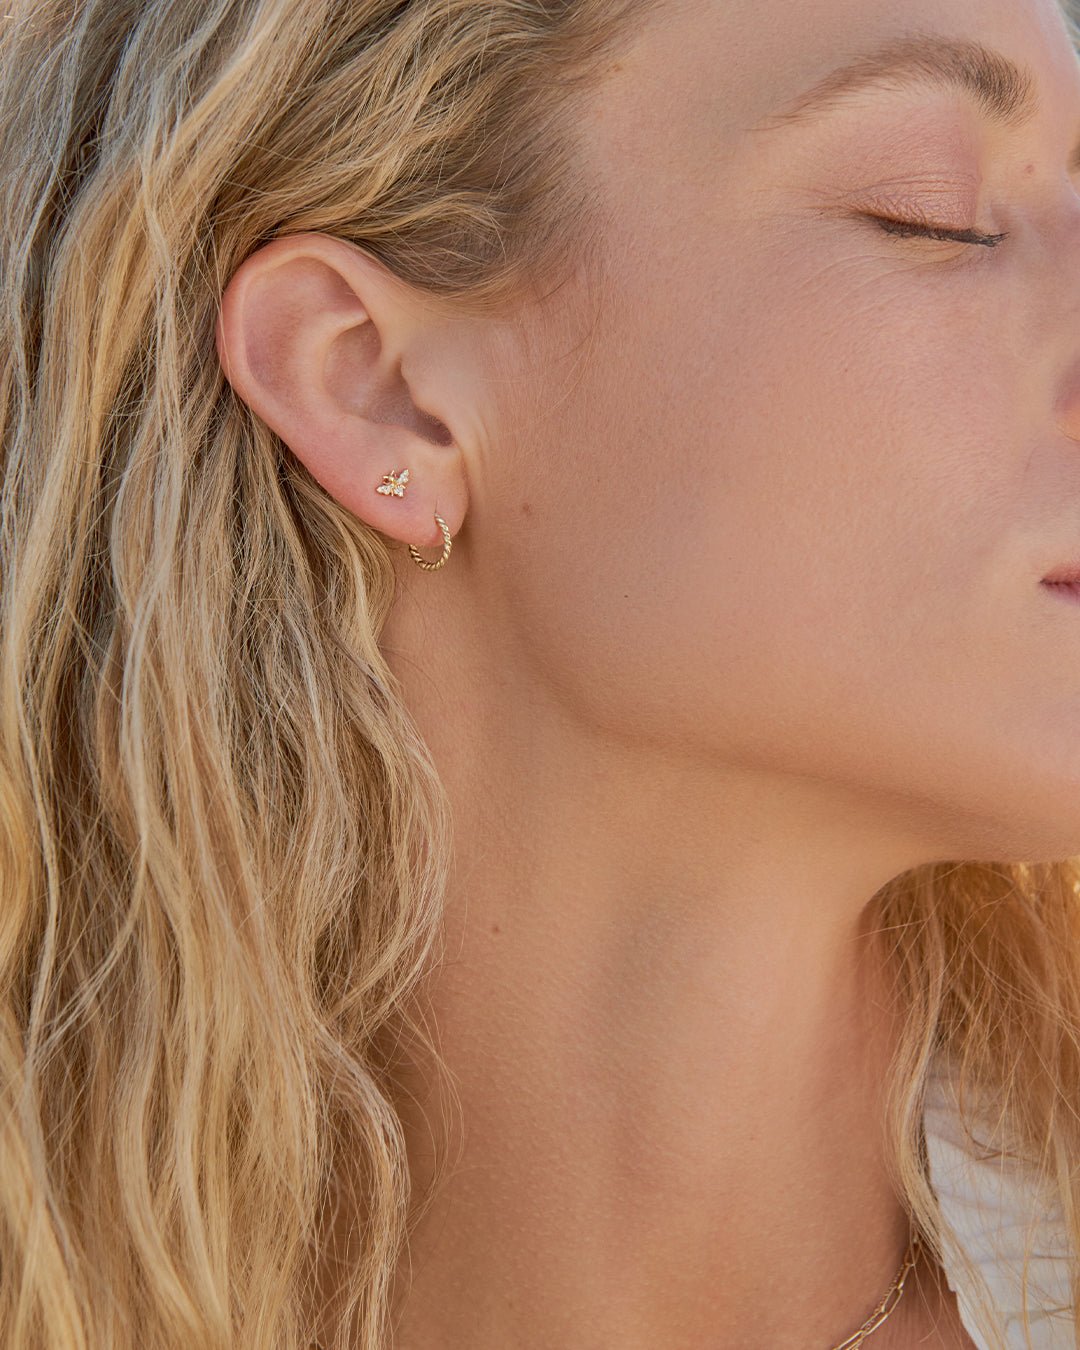 Newport Threaded Flat Back Studs Earring in 14K Solid Gold/Pair, Women's by Gorjana